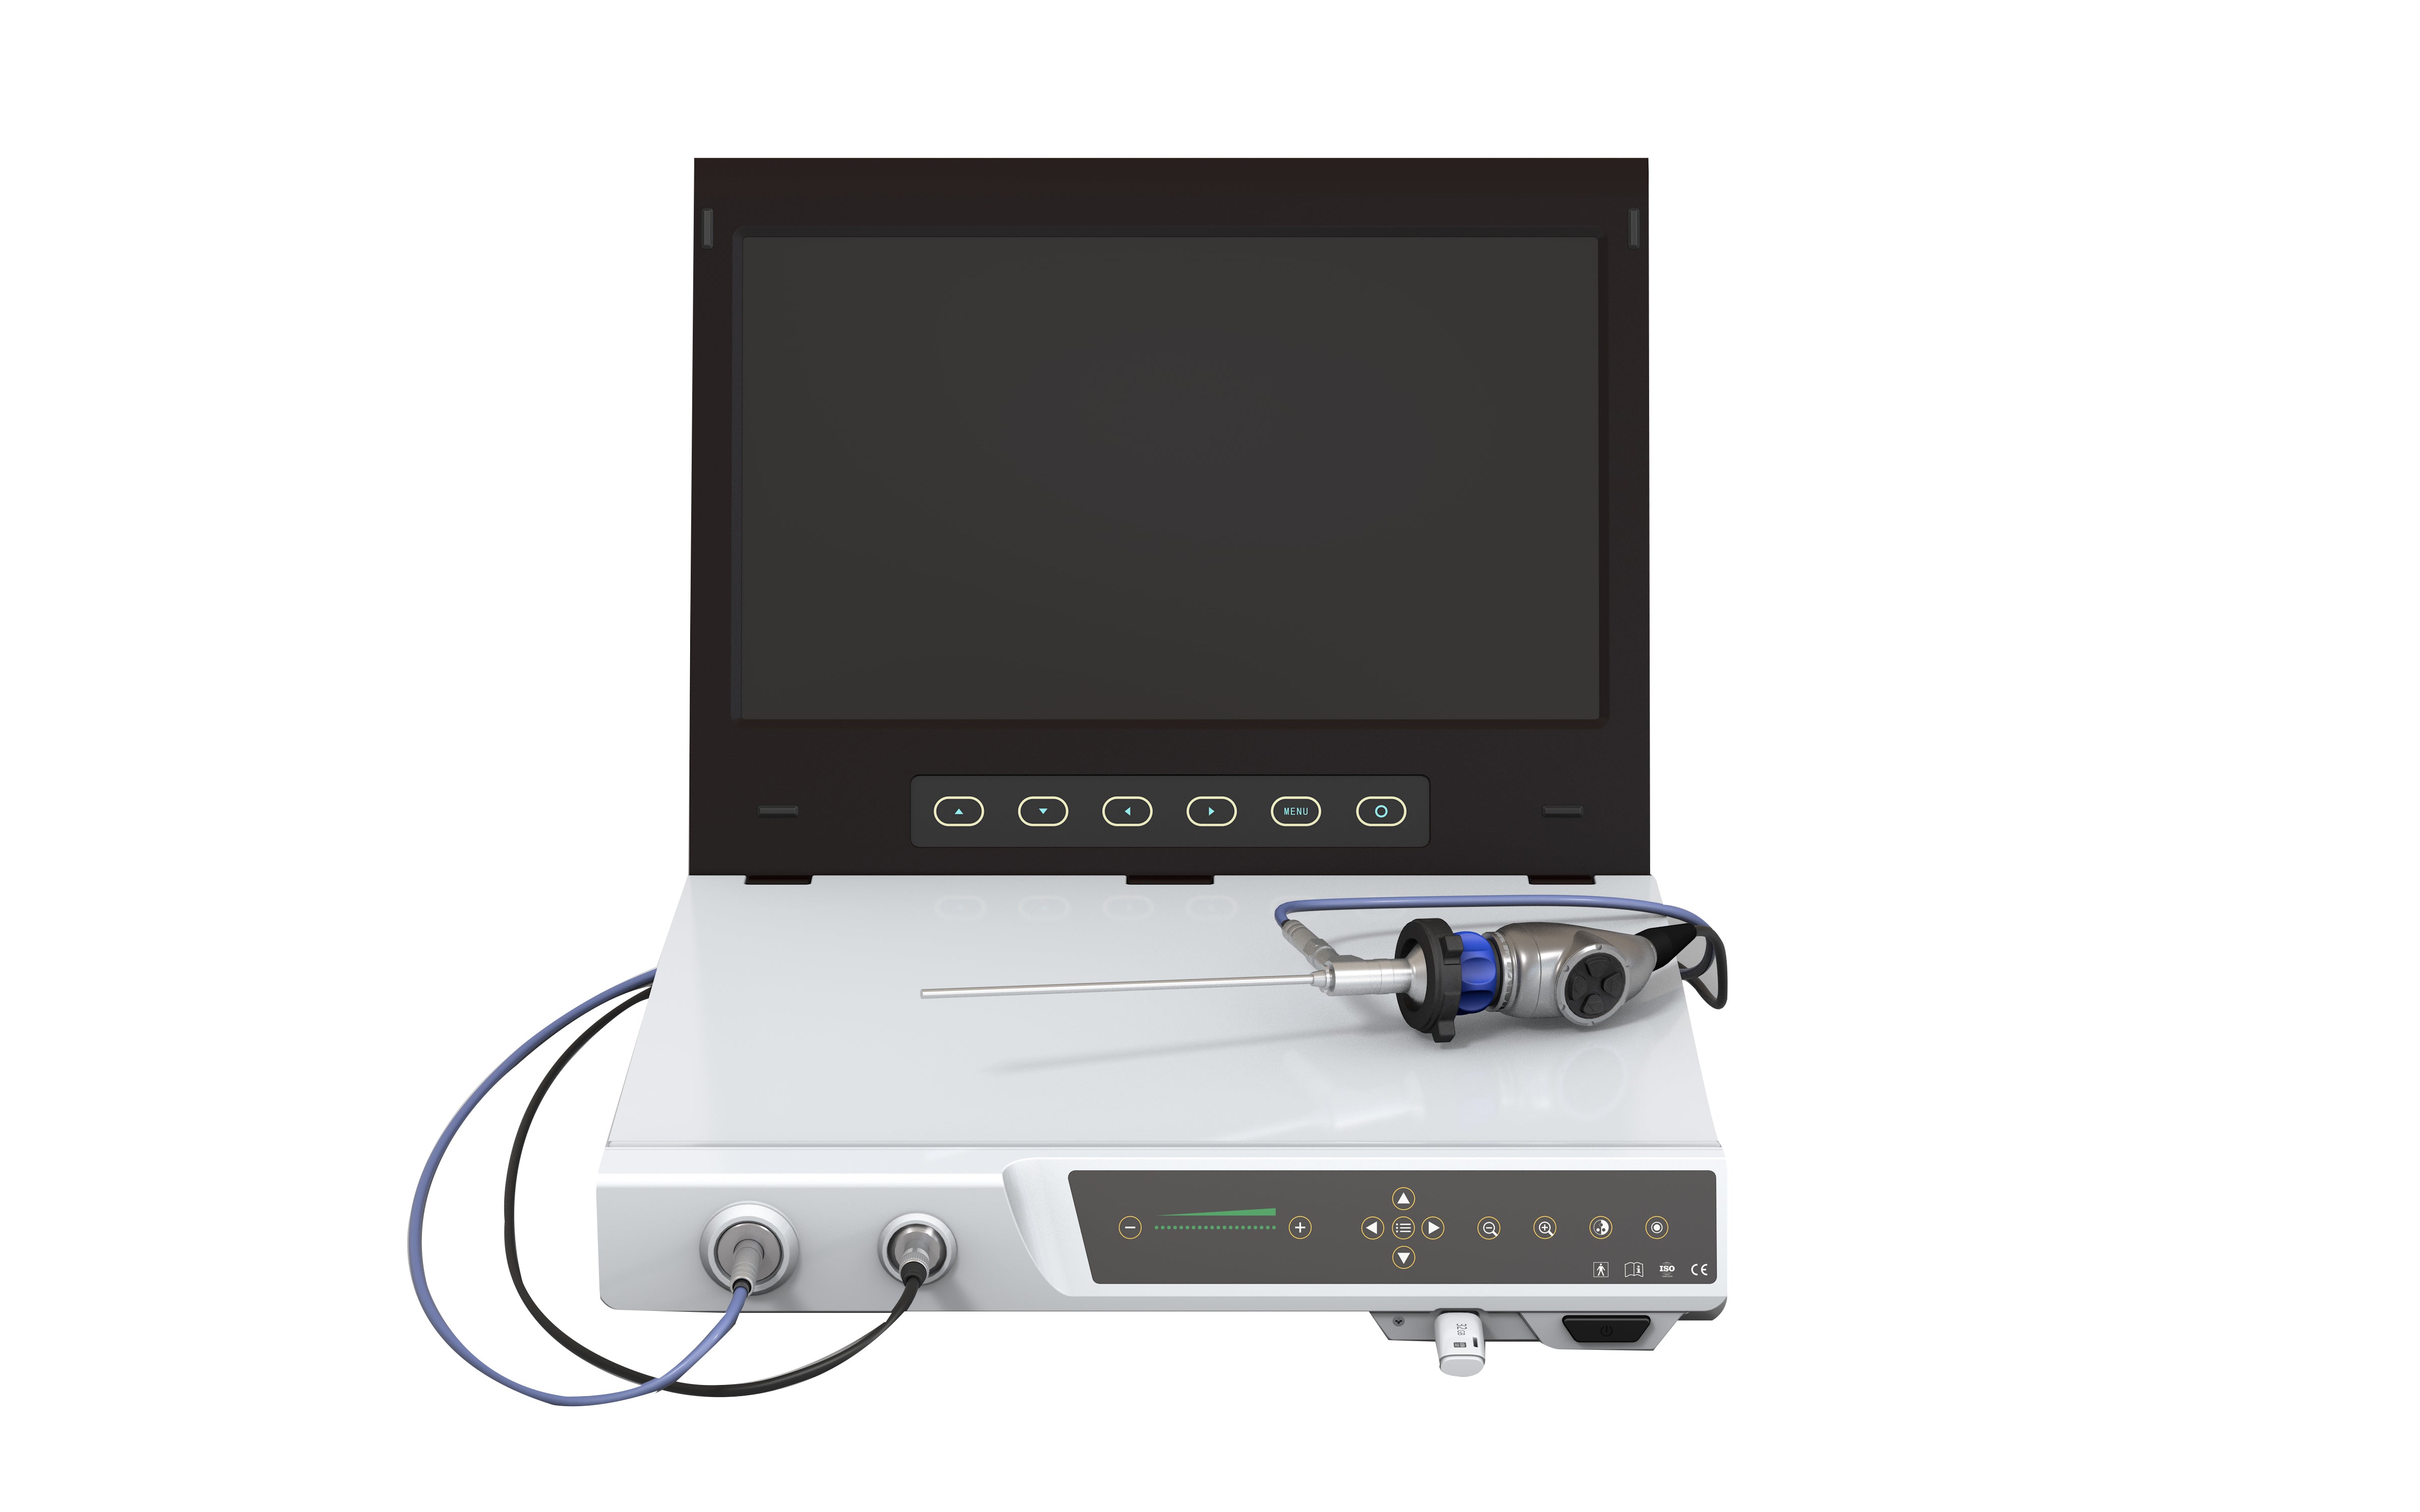 iVet-FALCON Rigid Endoscopy System